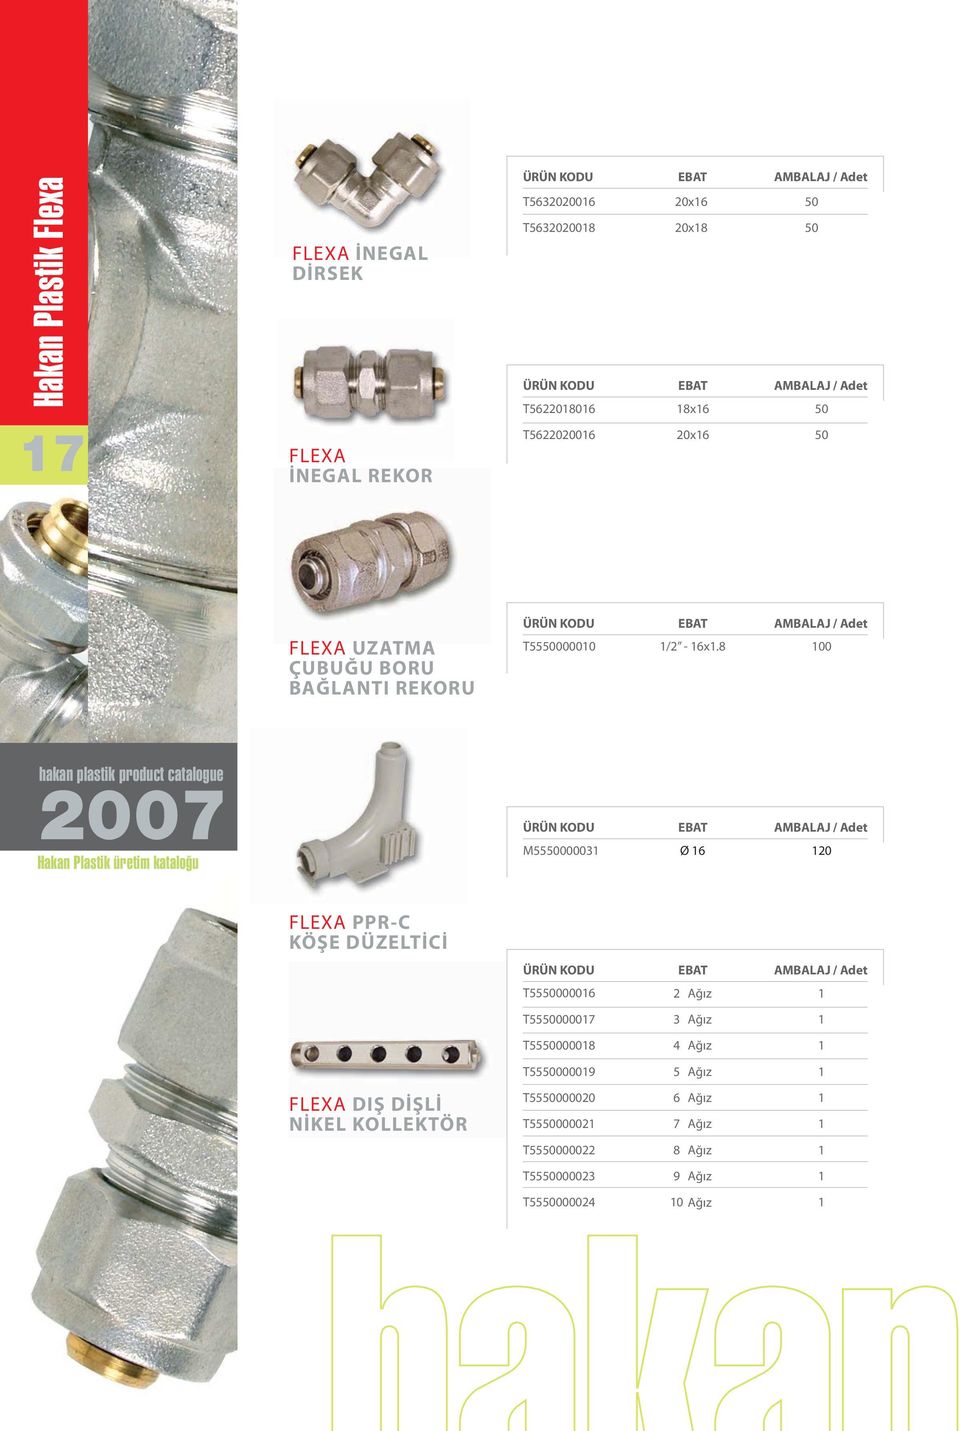 8 hakan plastik product catalogue 2007 Hakan Plastik üretim kataloðu M5500003 Ø 6 20 PPR-C KÖÞE DÜZELTÝCÝ